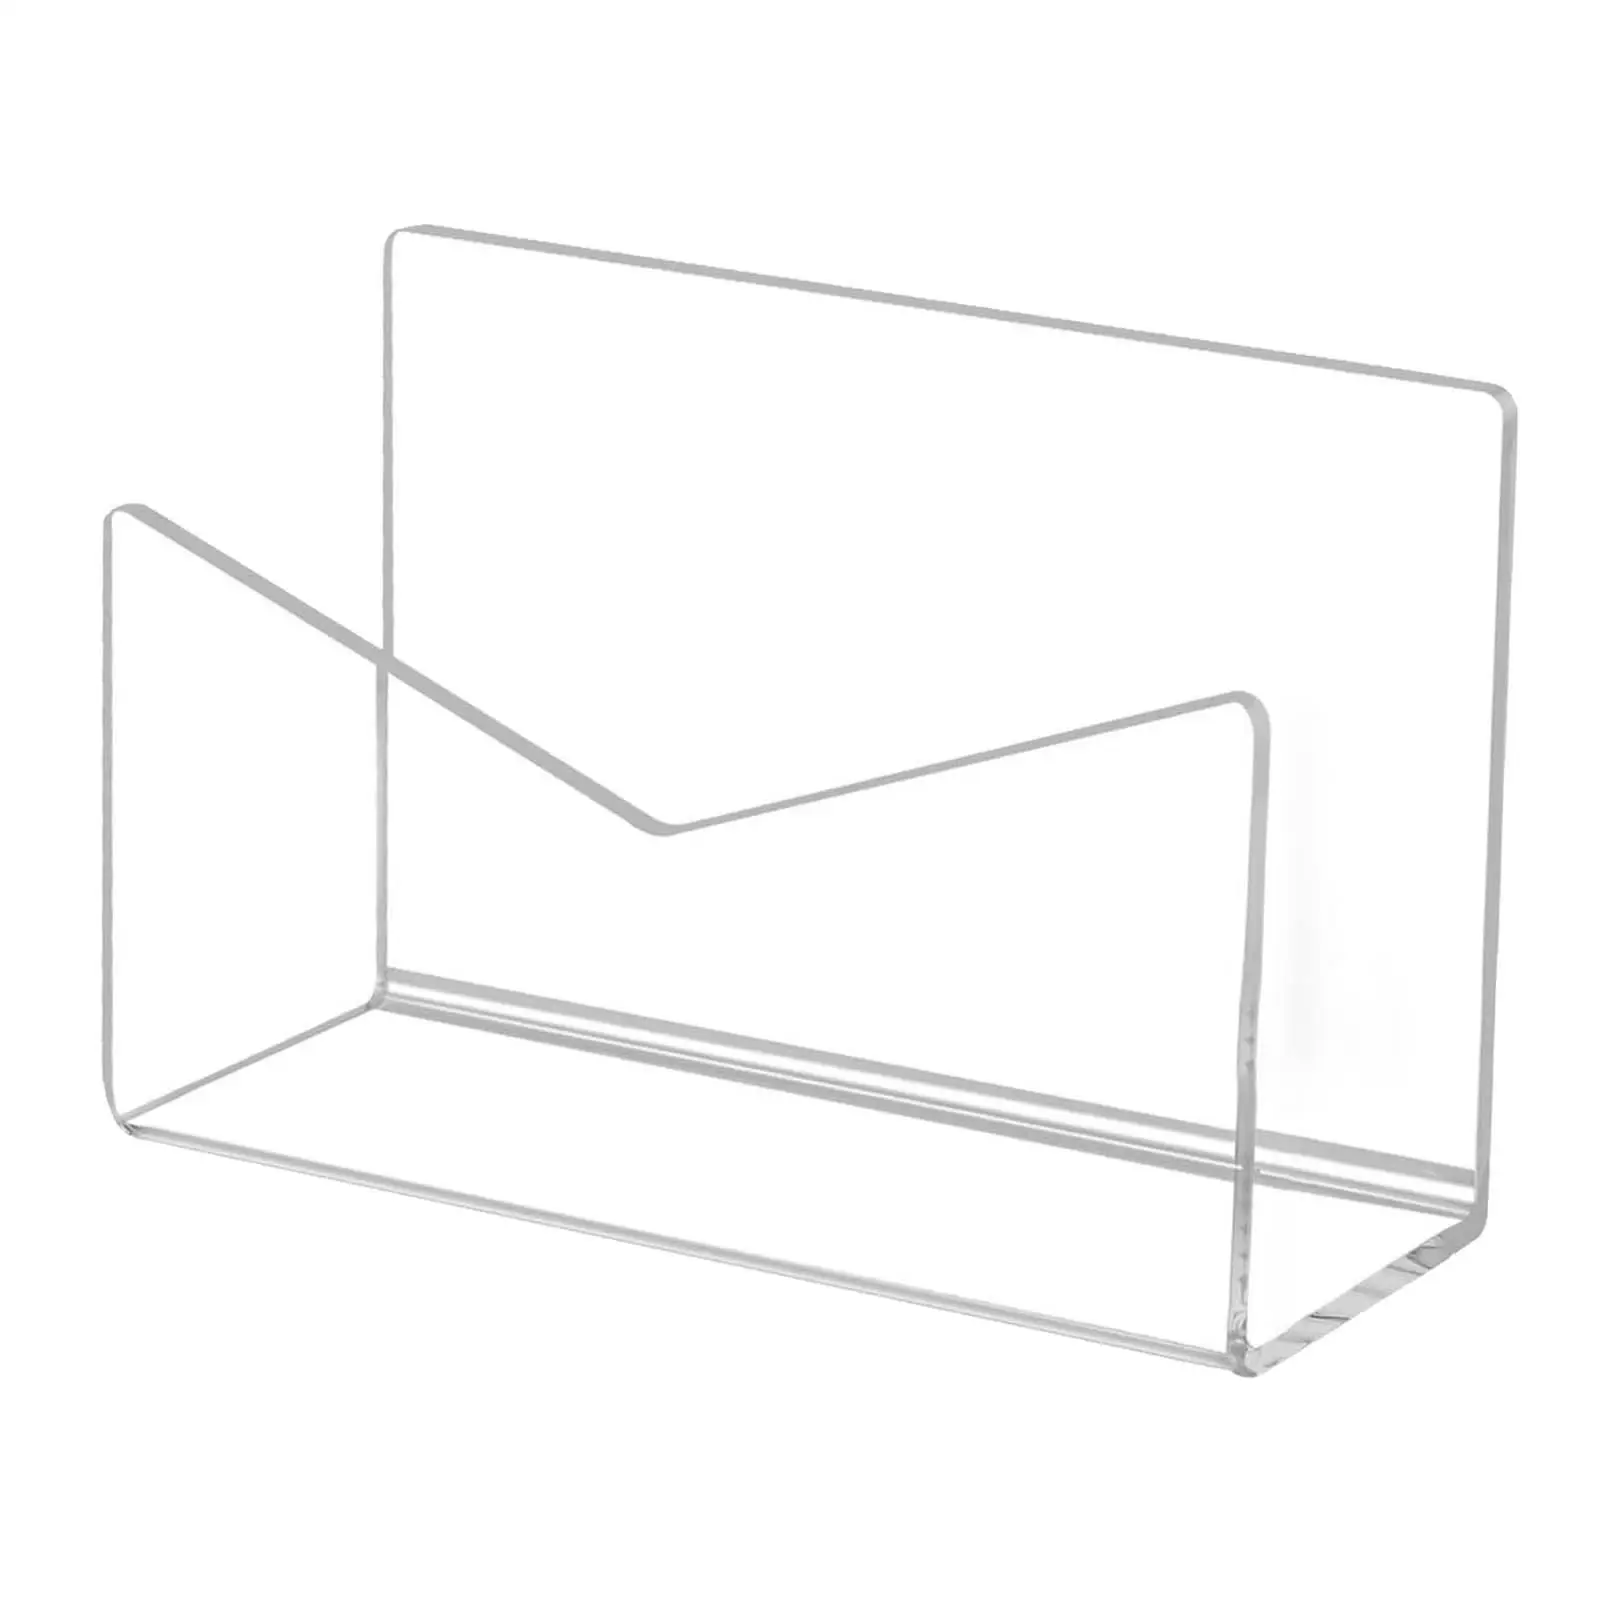 Mail Organizer Notebook Organization Filing Folder Desktop Letter Holder Letter Rack for Classroom Office Home Countertop School